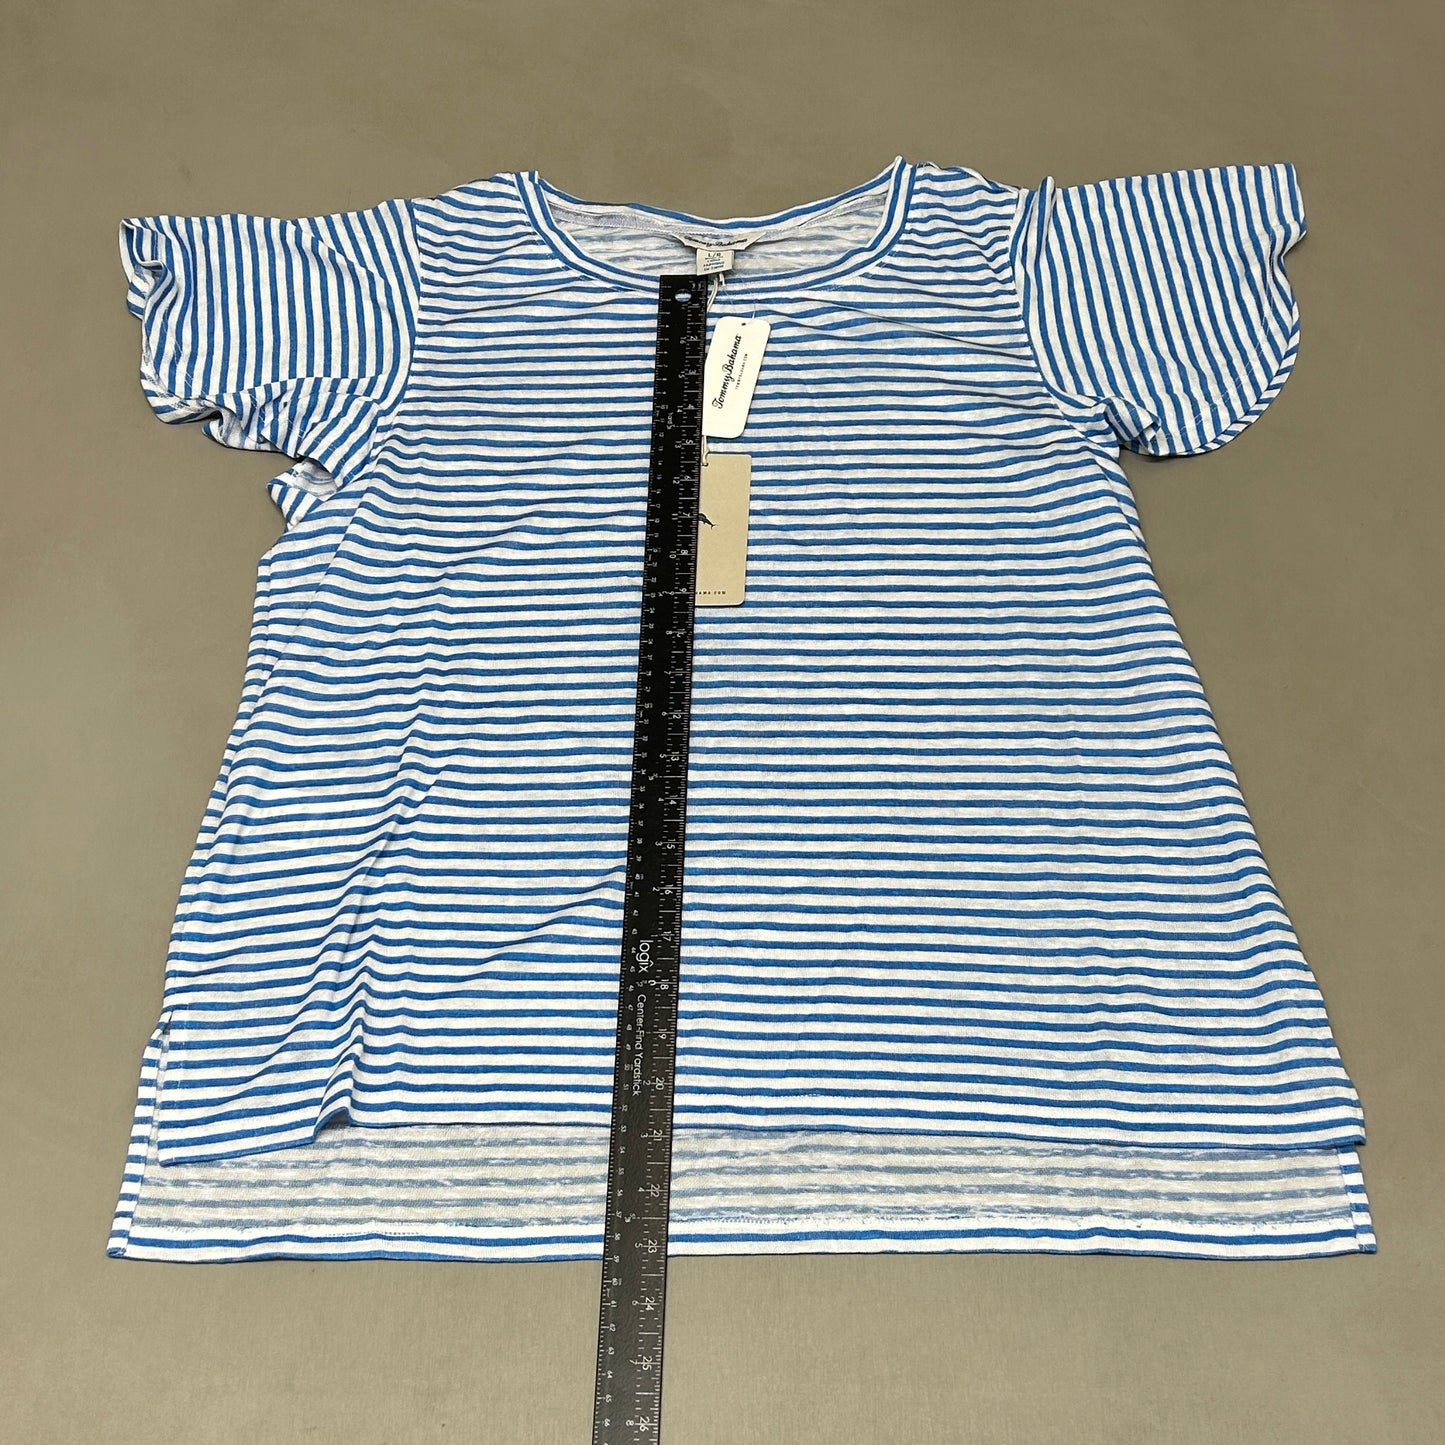 TOMMY BAHAMA Women's Bungalow Stripe Lana Top Short Sleeve Blue/White Size L (New)